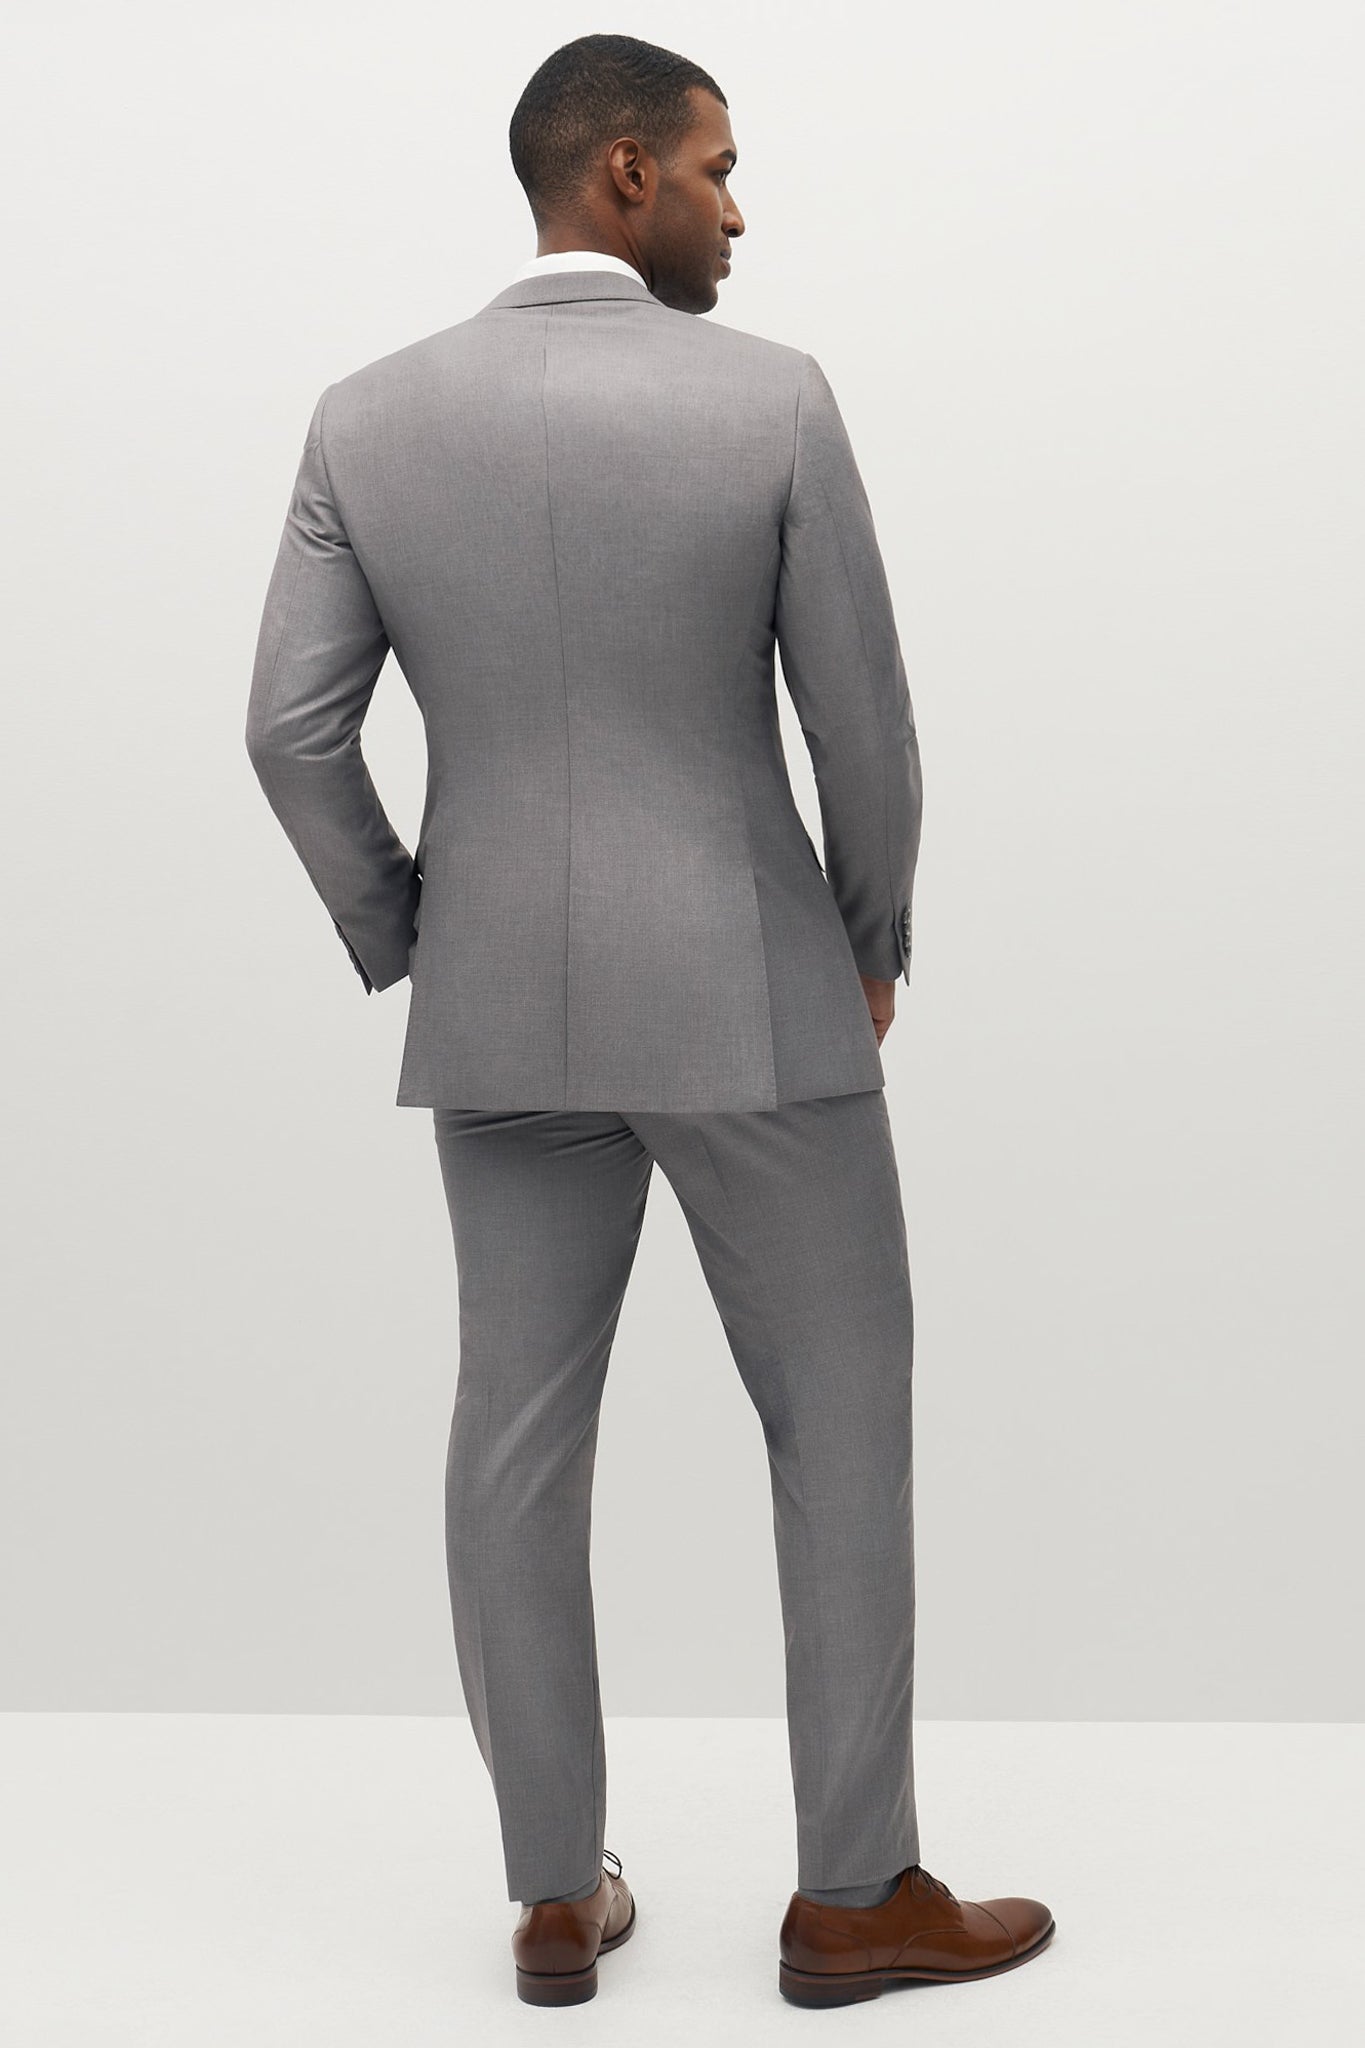 Textured Gray Suit Pants by SuitShop